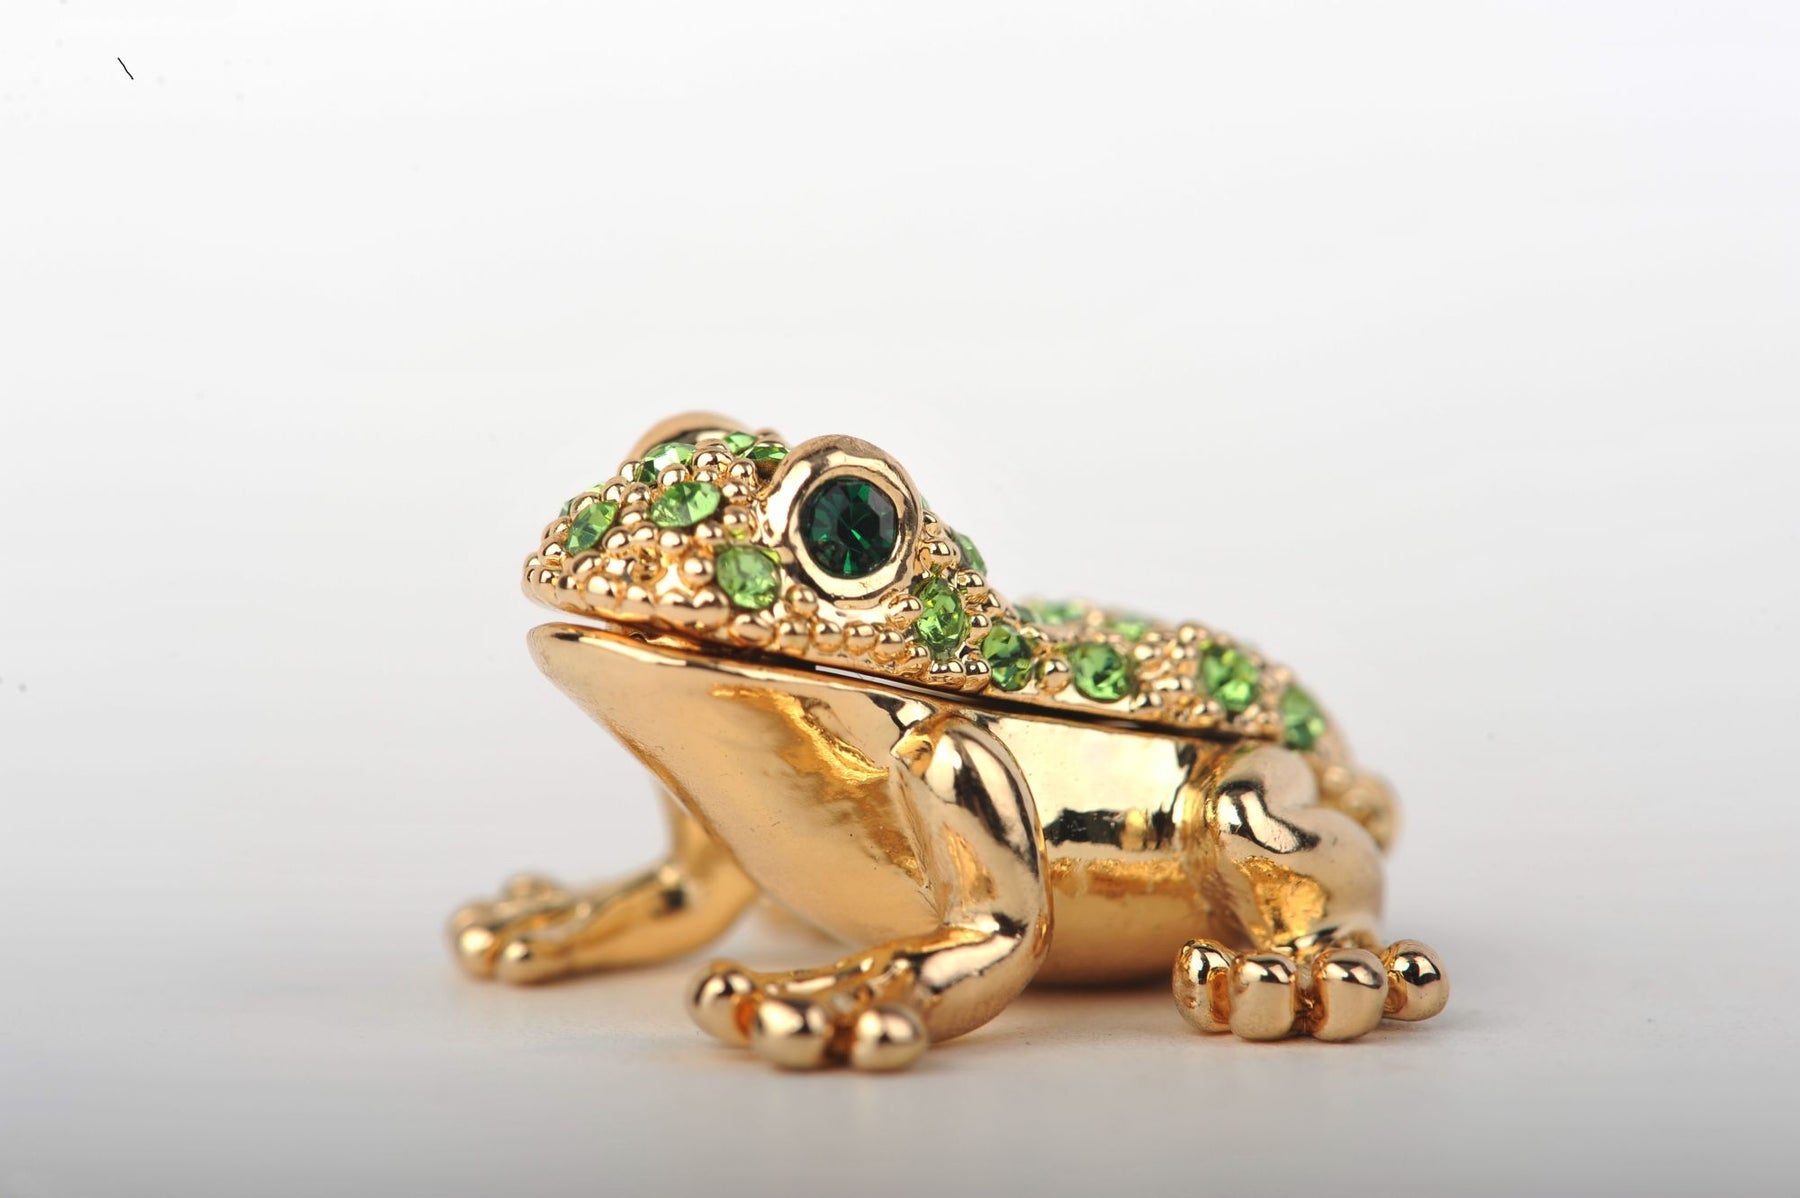 Keren Kopal Tiny Gold & Green Sitting Toad  17.00